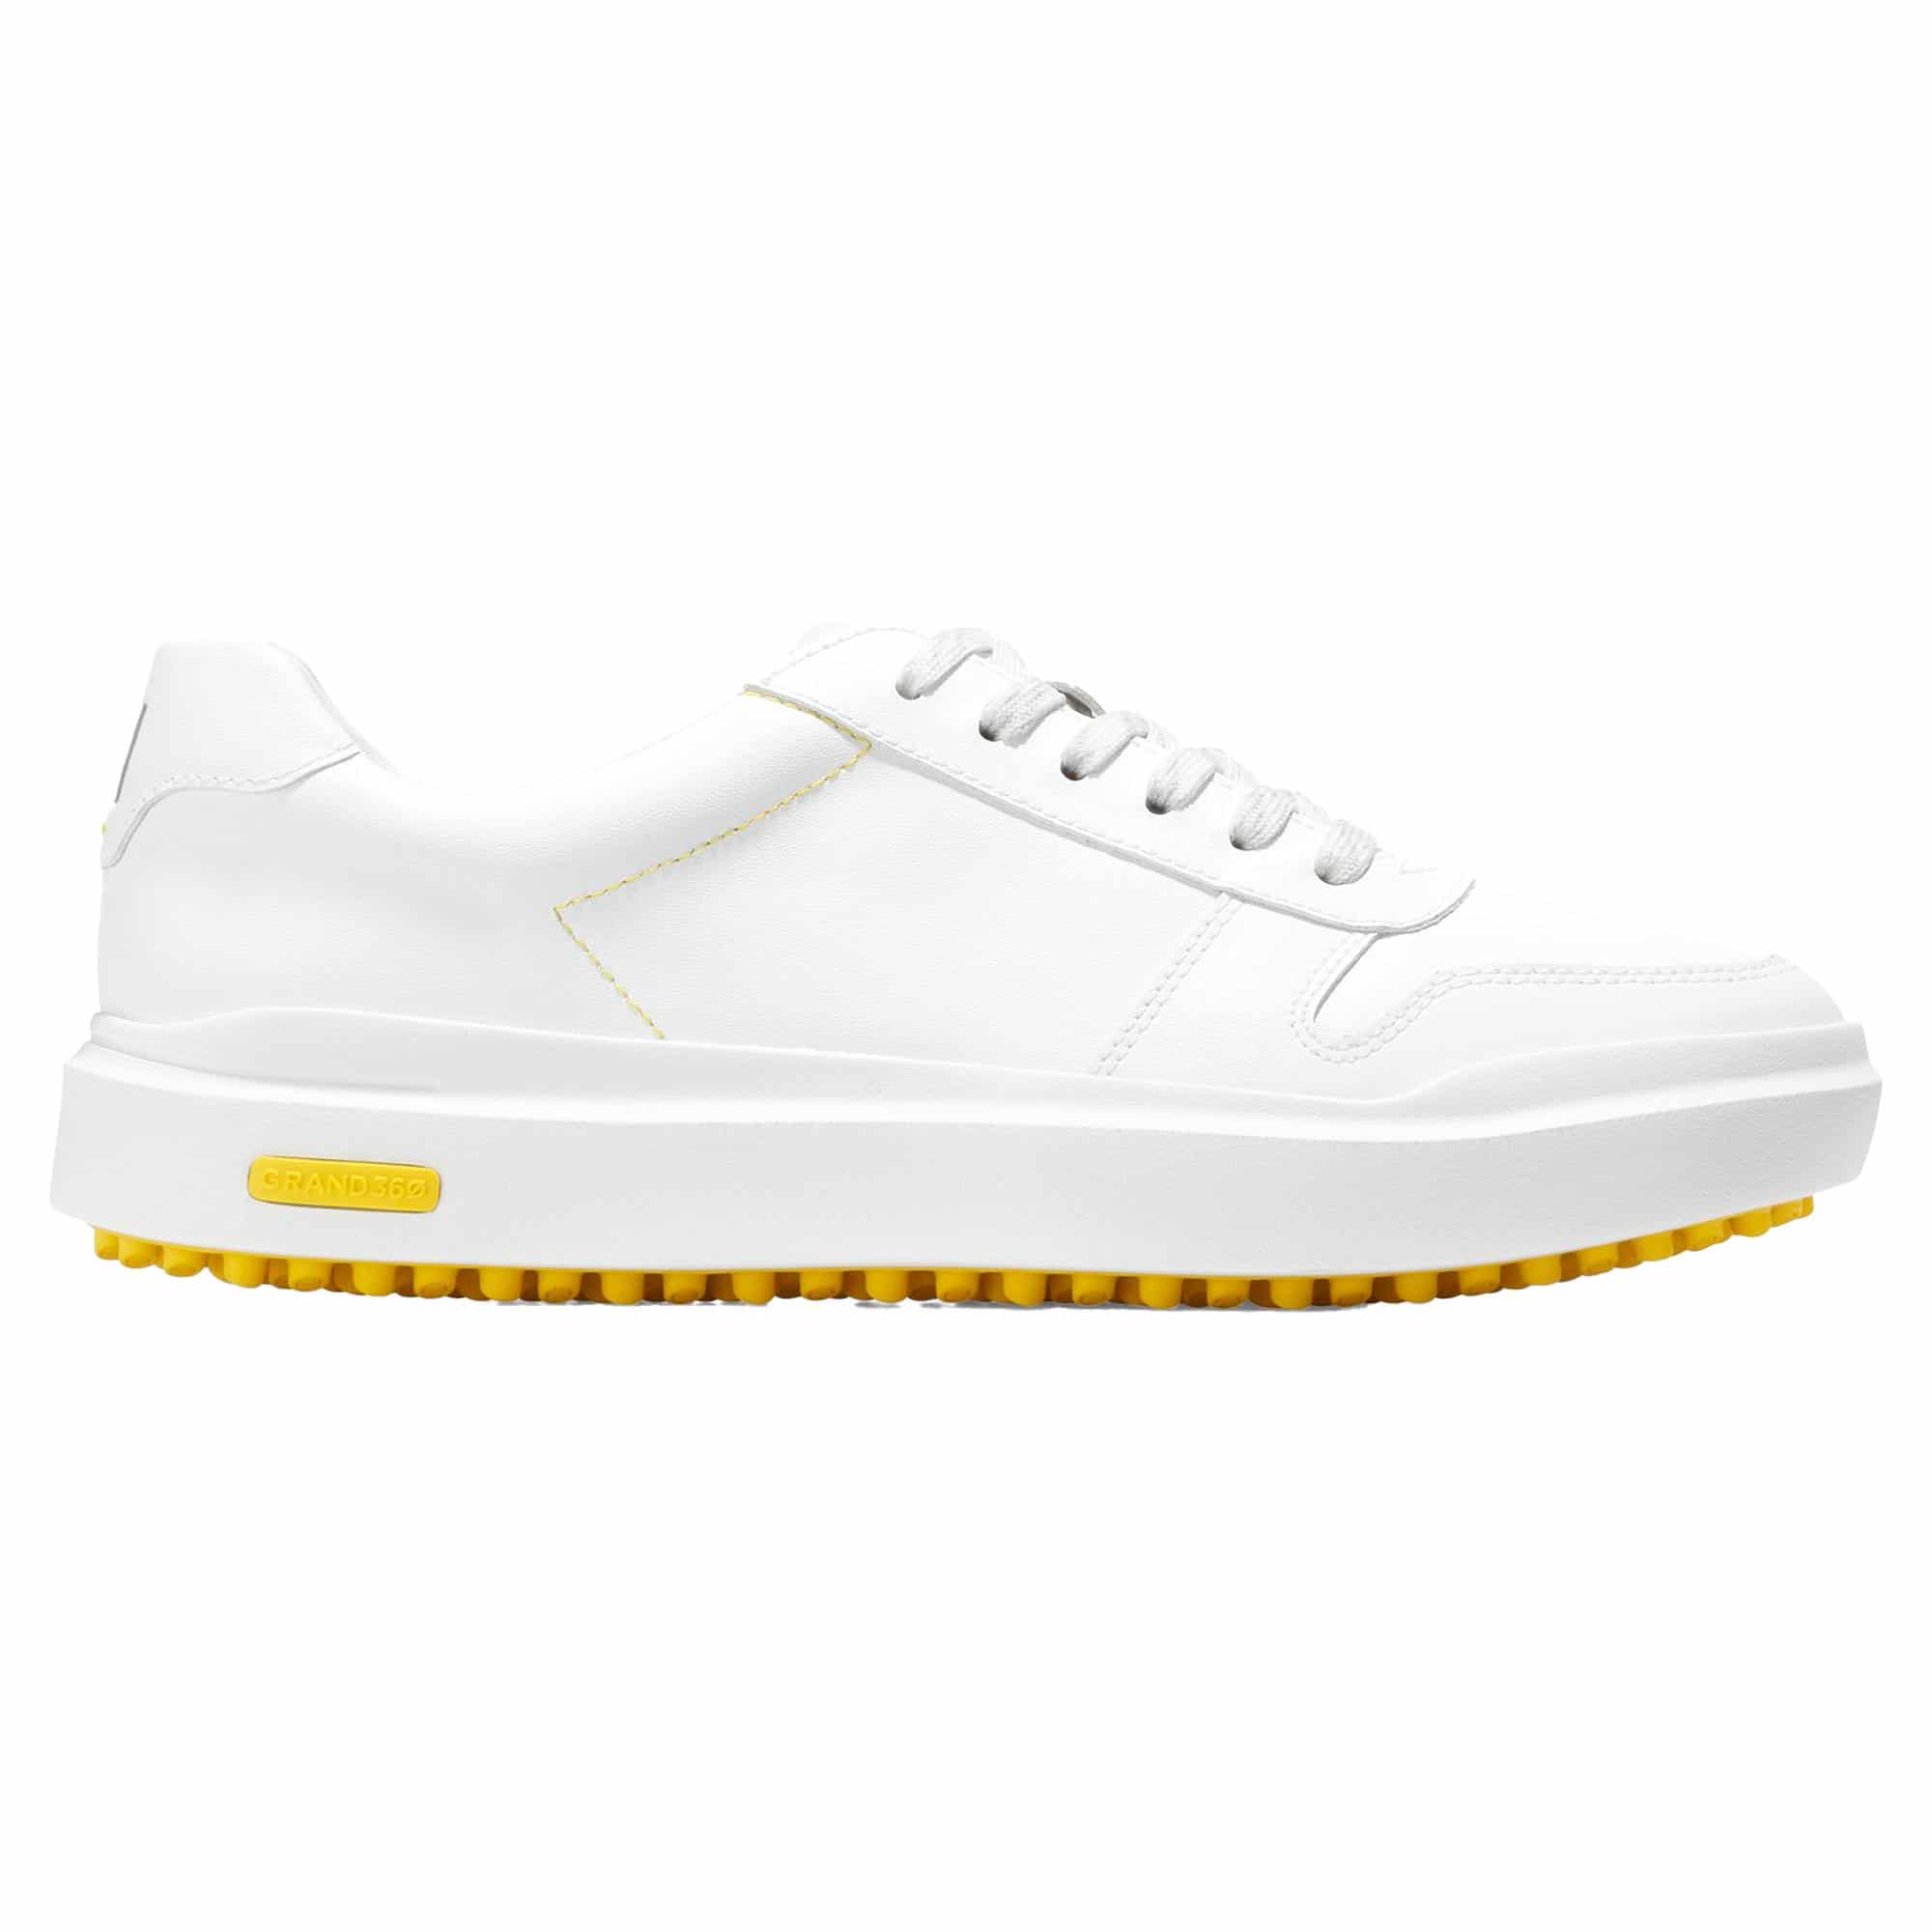 Cole Haan GrandPr AM Ladies Golf Shoe Bright White LTR